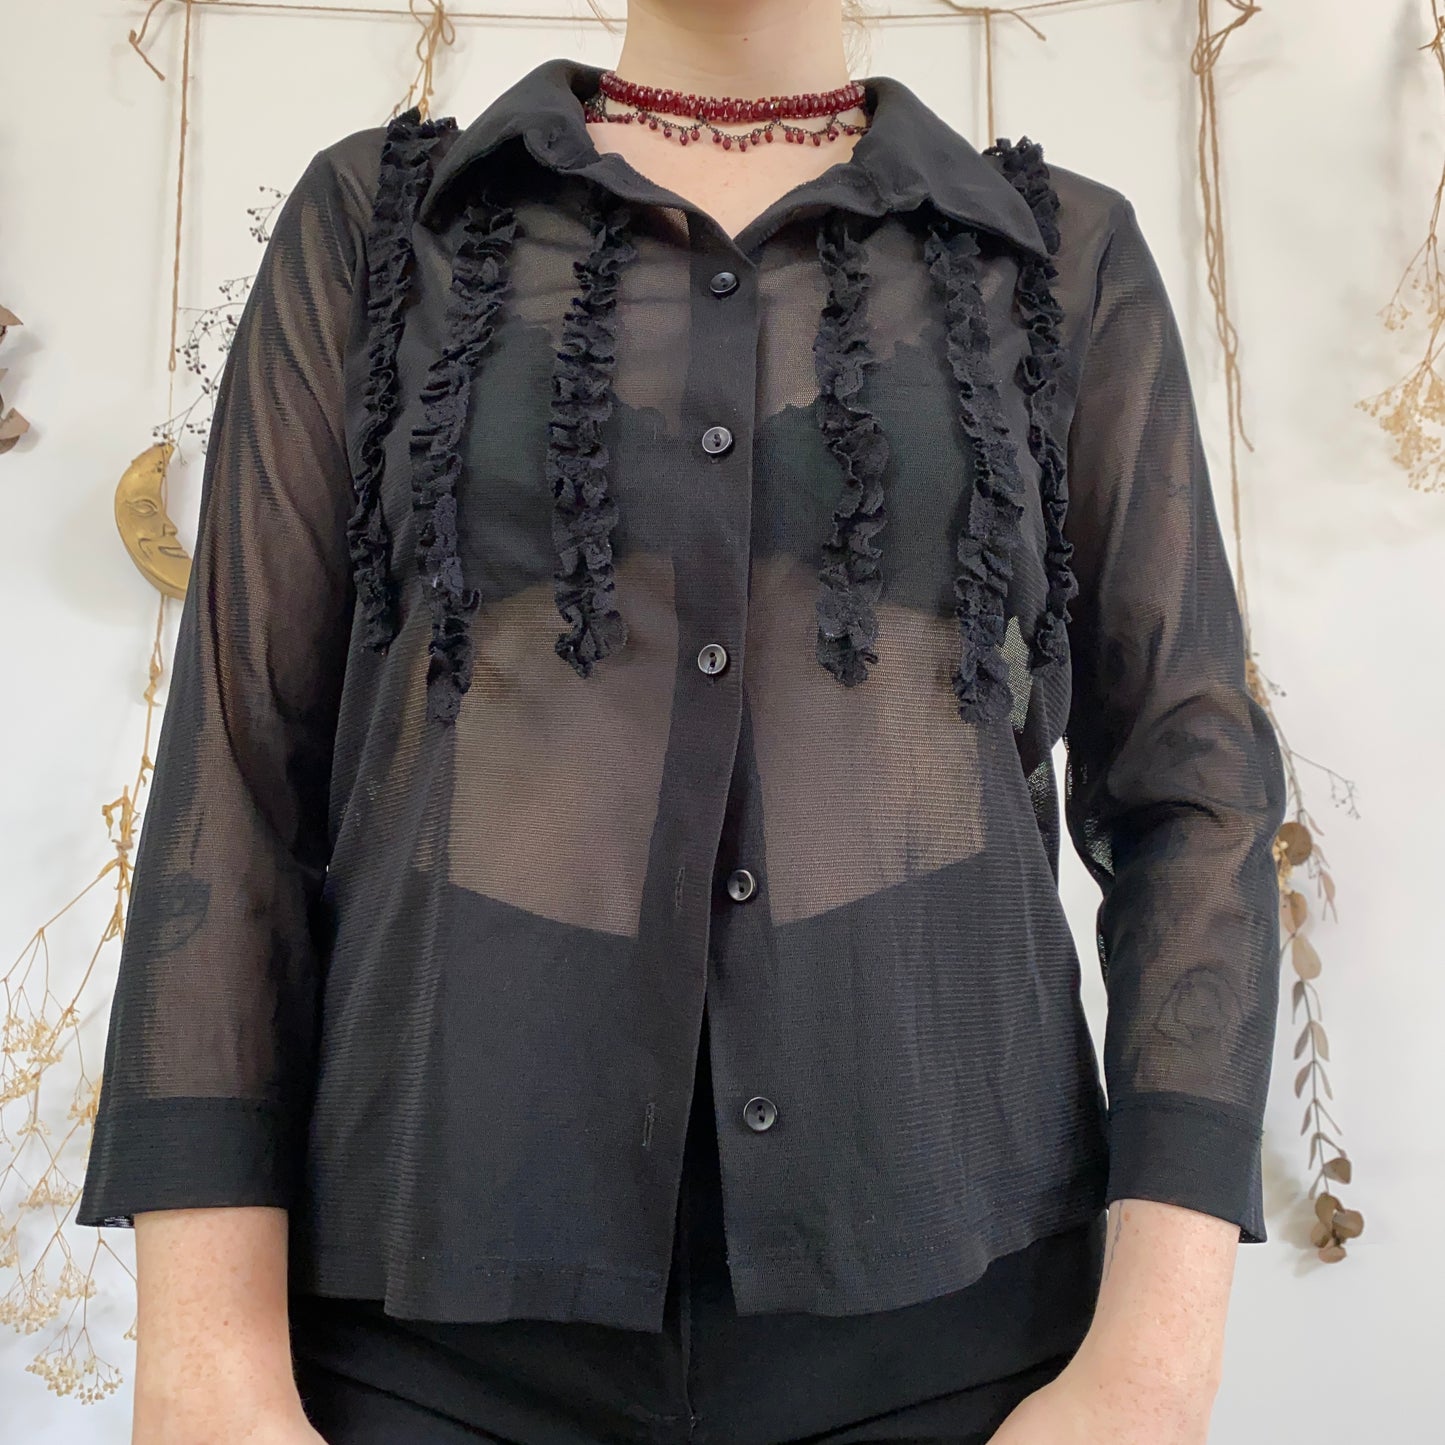 Black mesh shirt - size 16